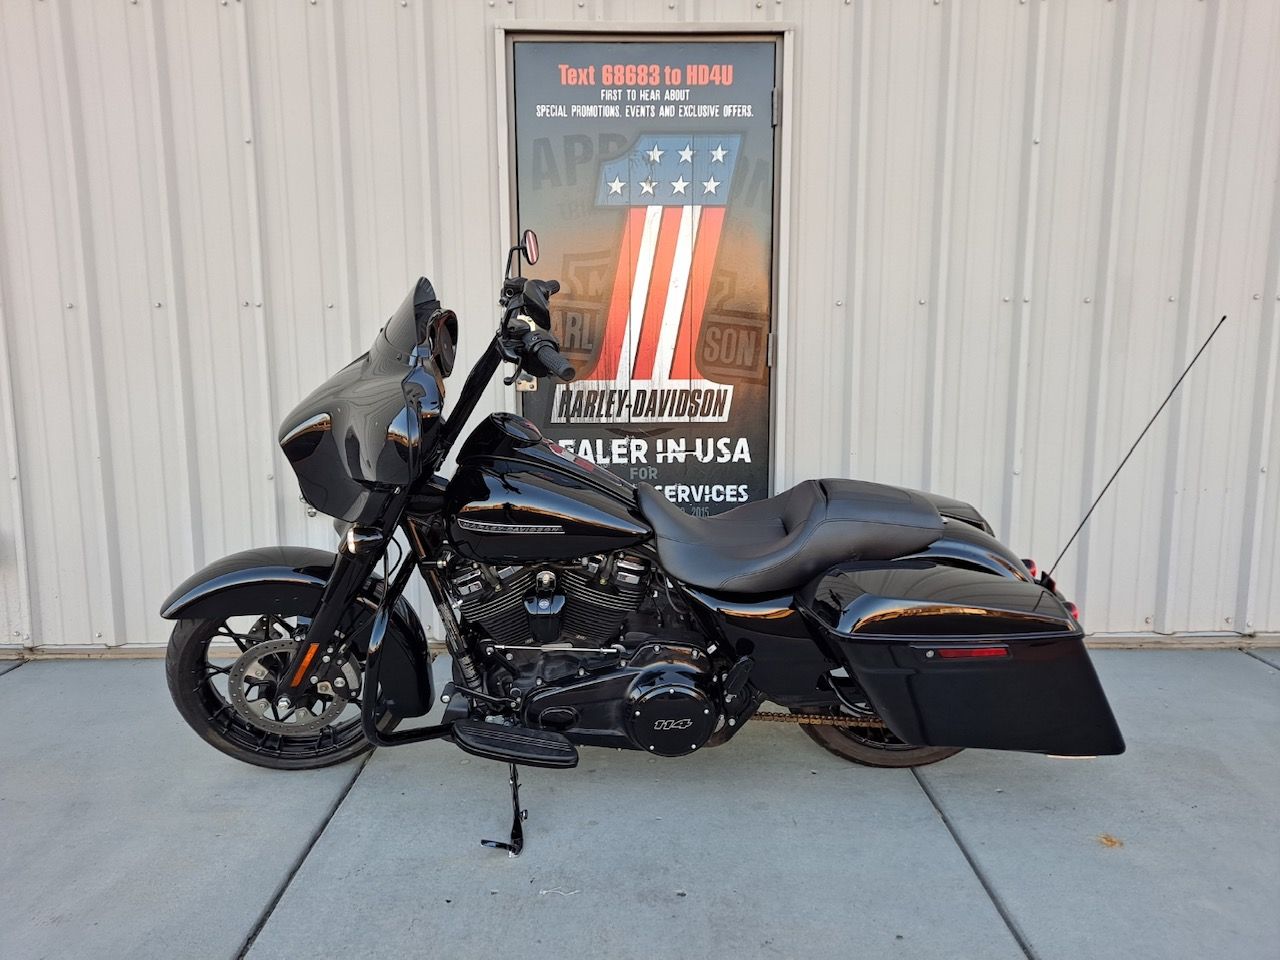 2020 Harley-Davidson Street Glide® Special in Clarksville, Tennessee - Photo 2